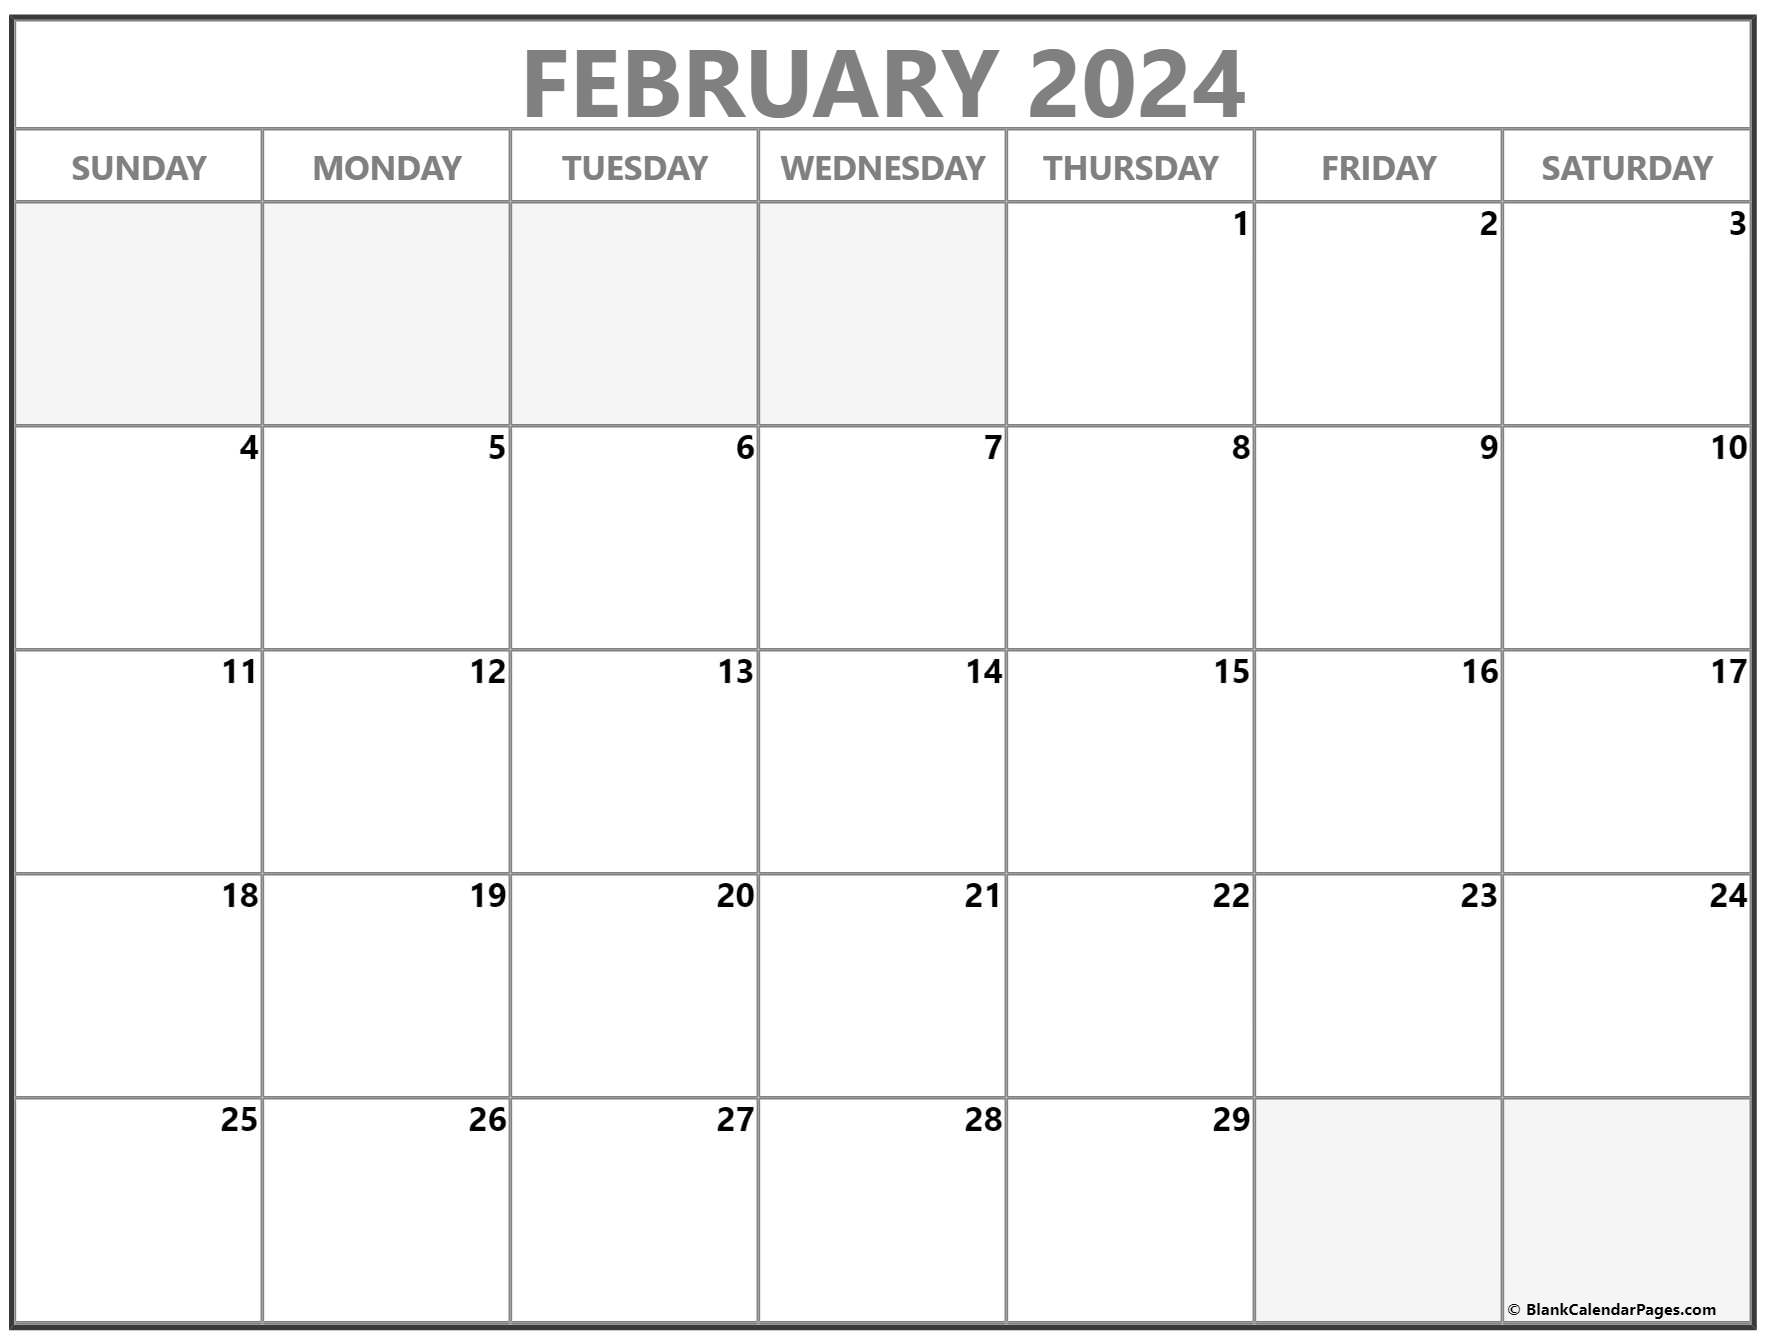 2023 Calendar Printable One Page Calendar Of National Days